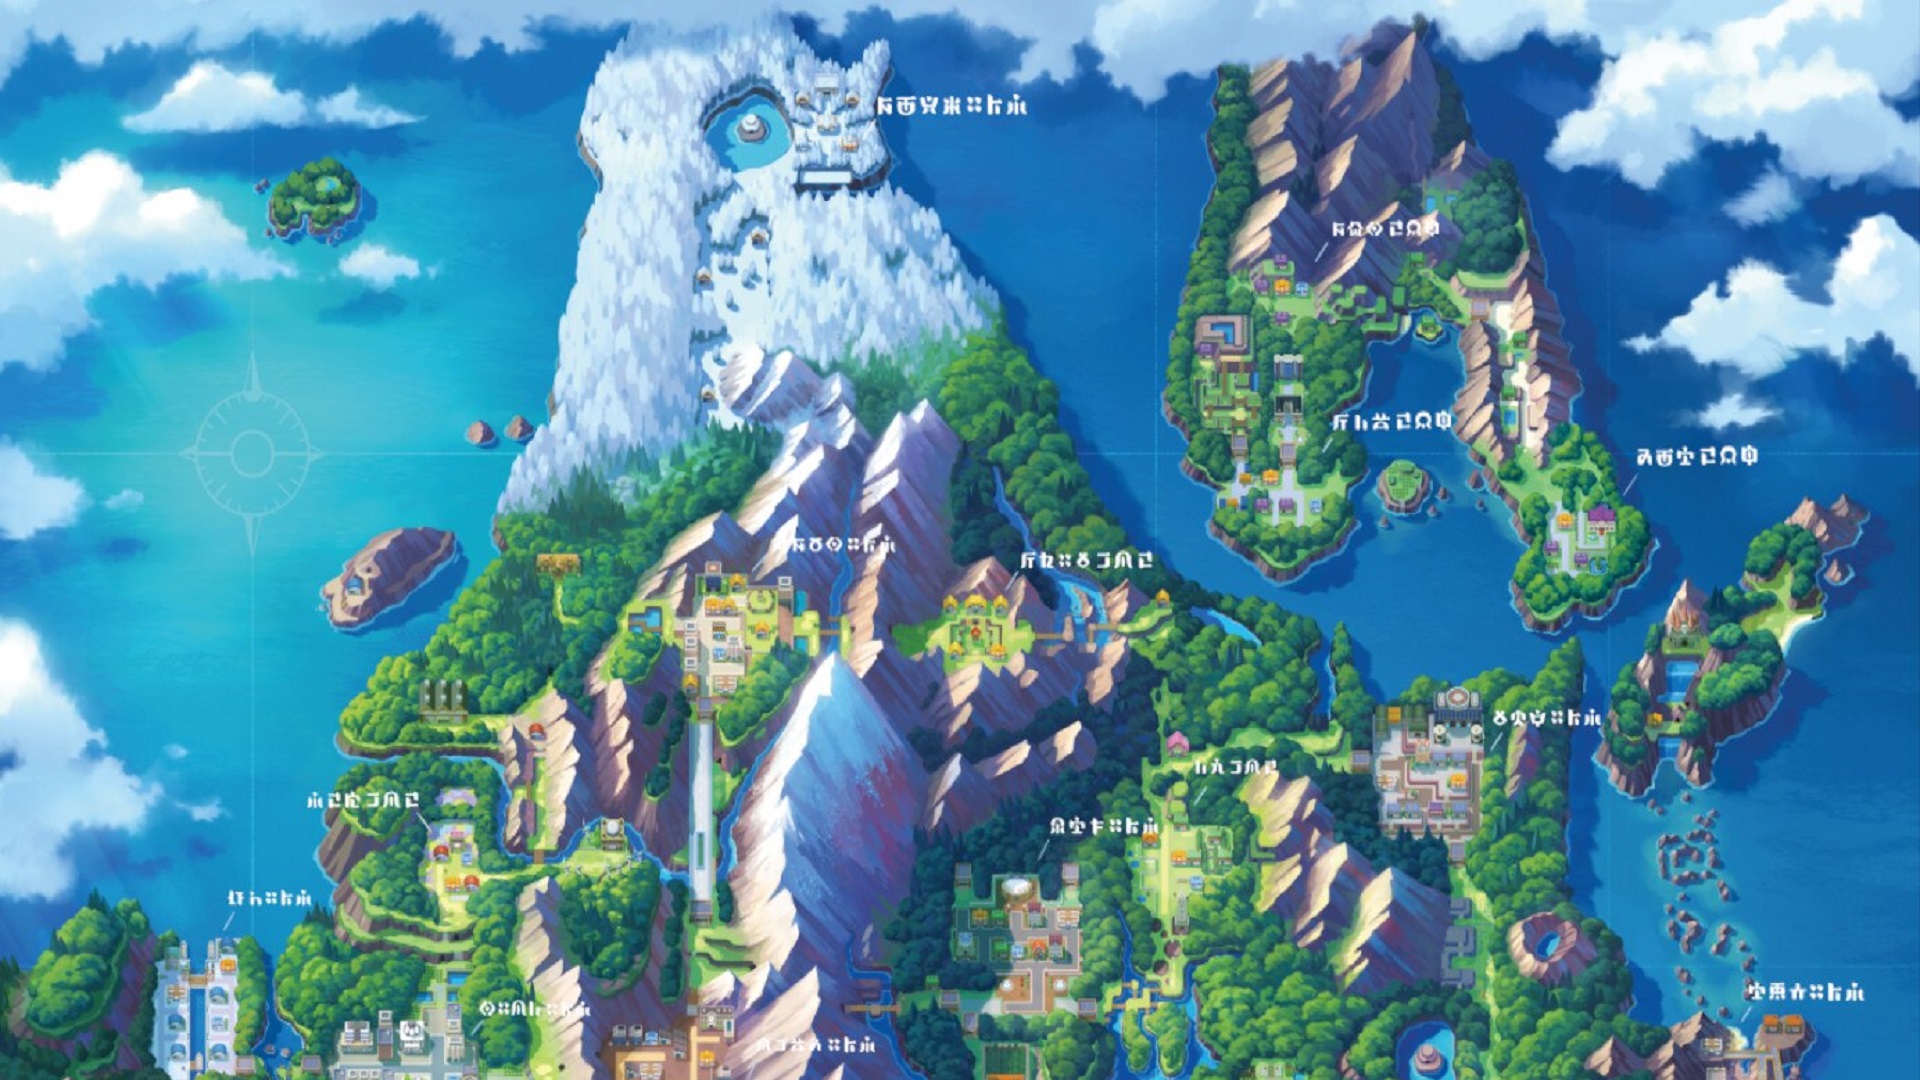 Conquer Pokémon’s Sinnoh region with this Civilization 6 map mod